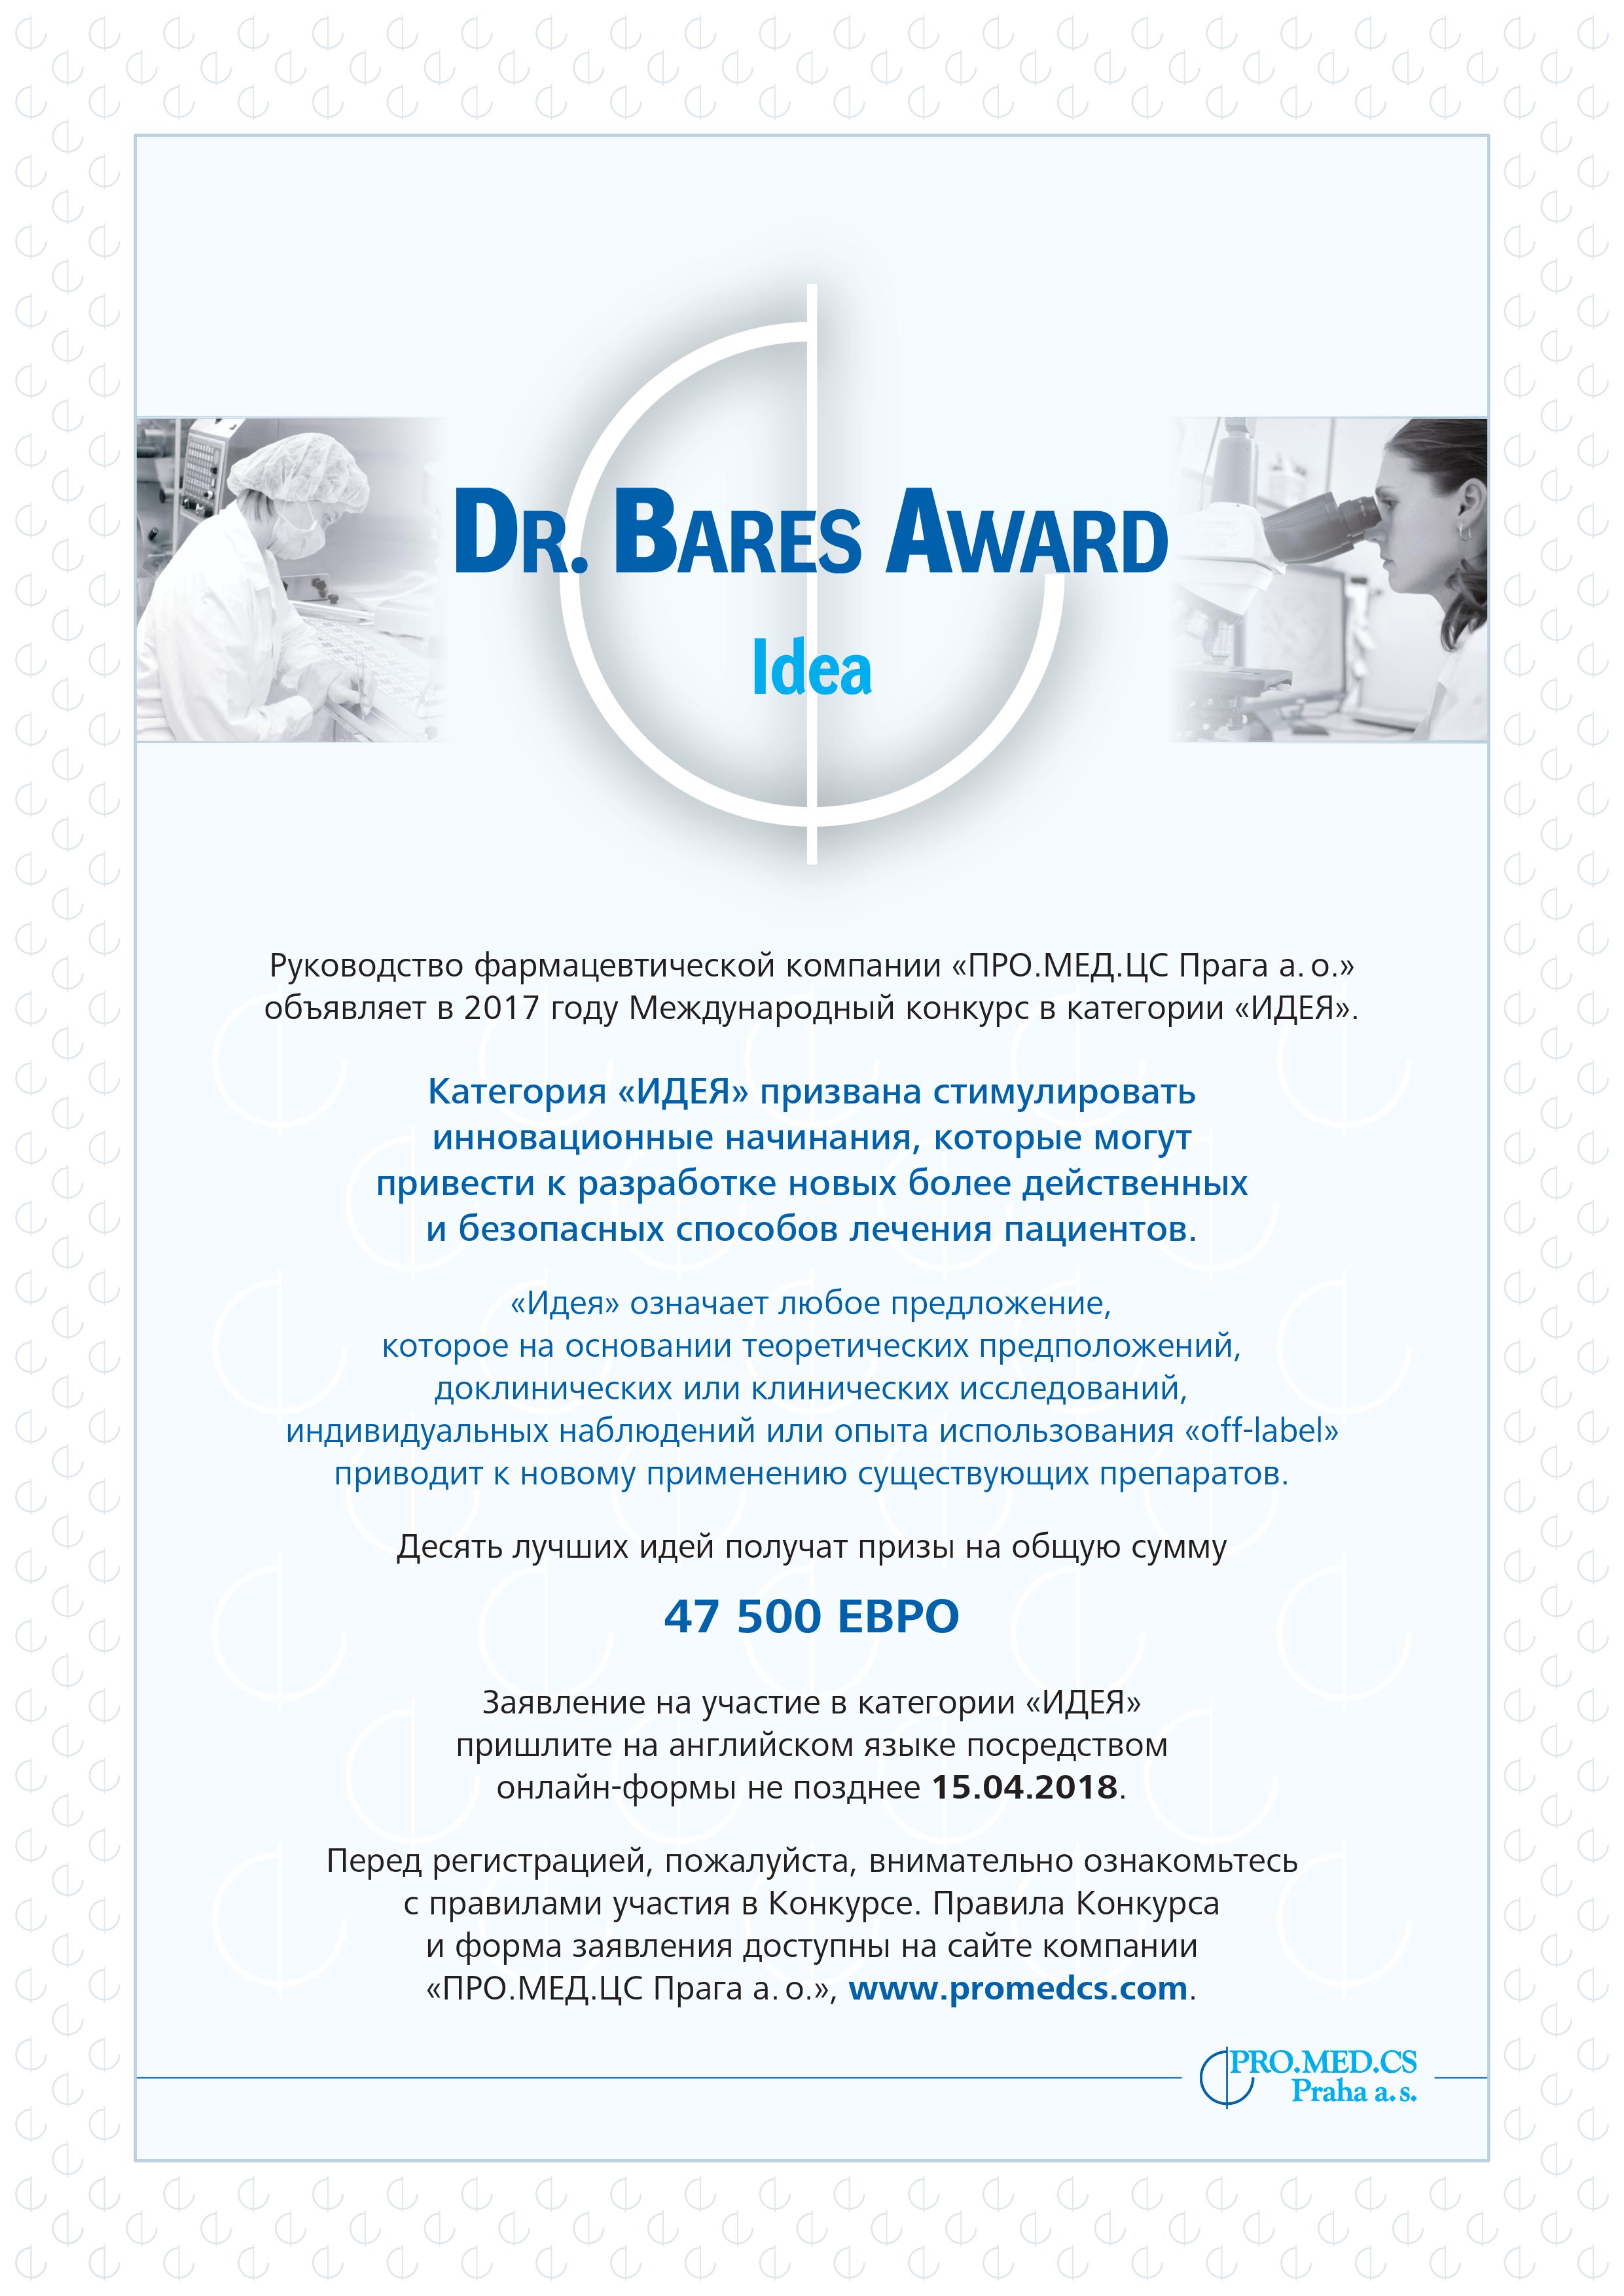 dr_barres_award